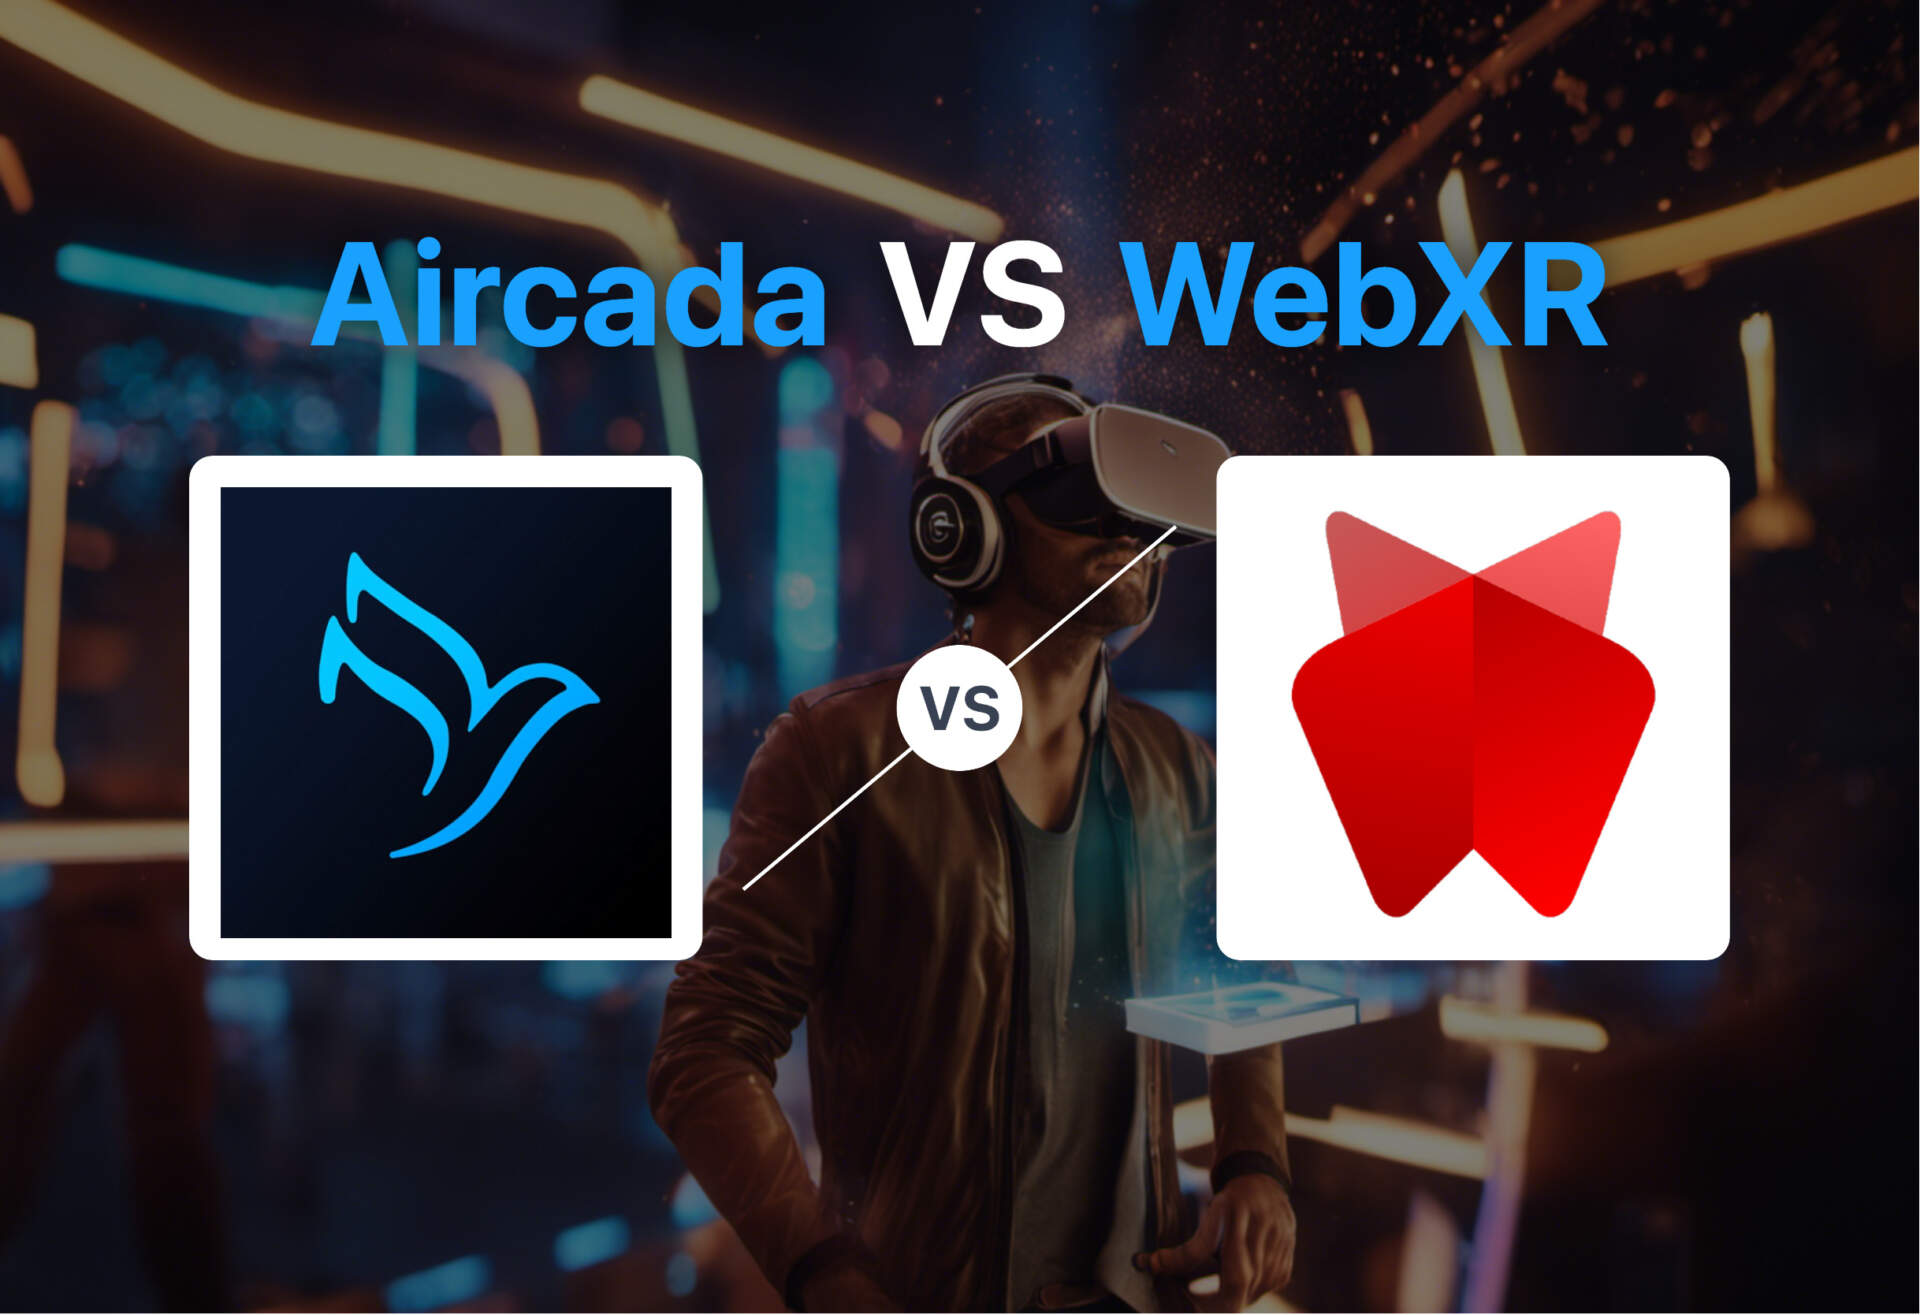 Comparing Aircada and WebXR